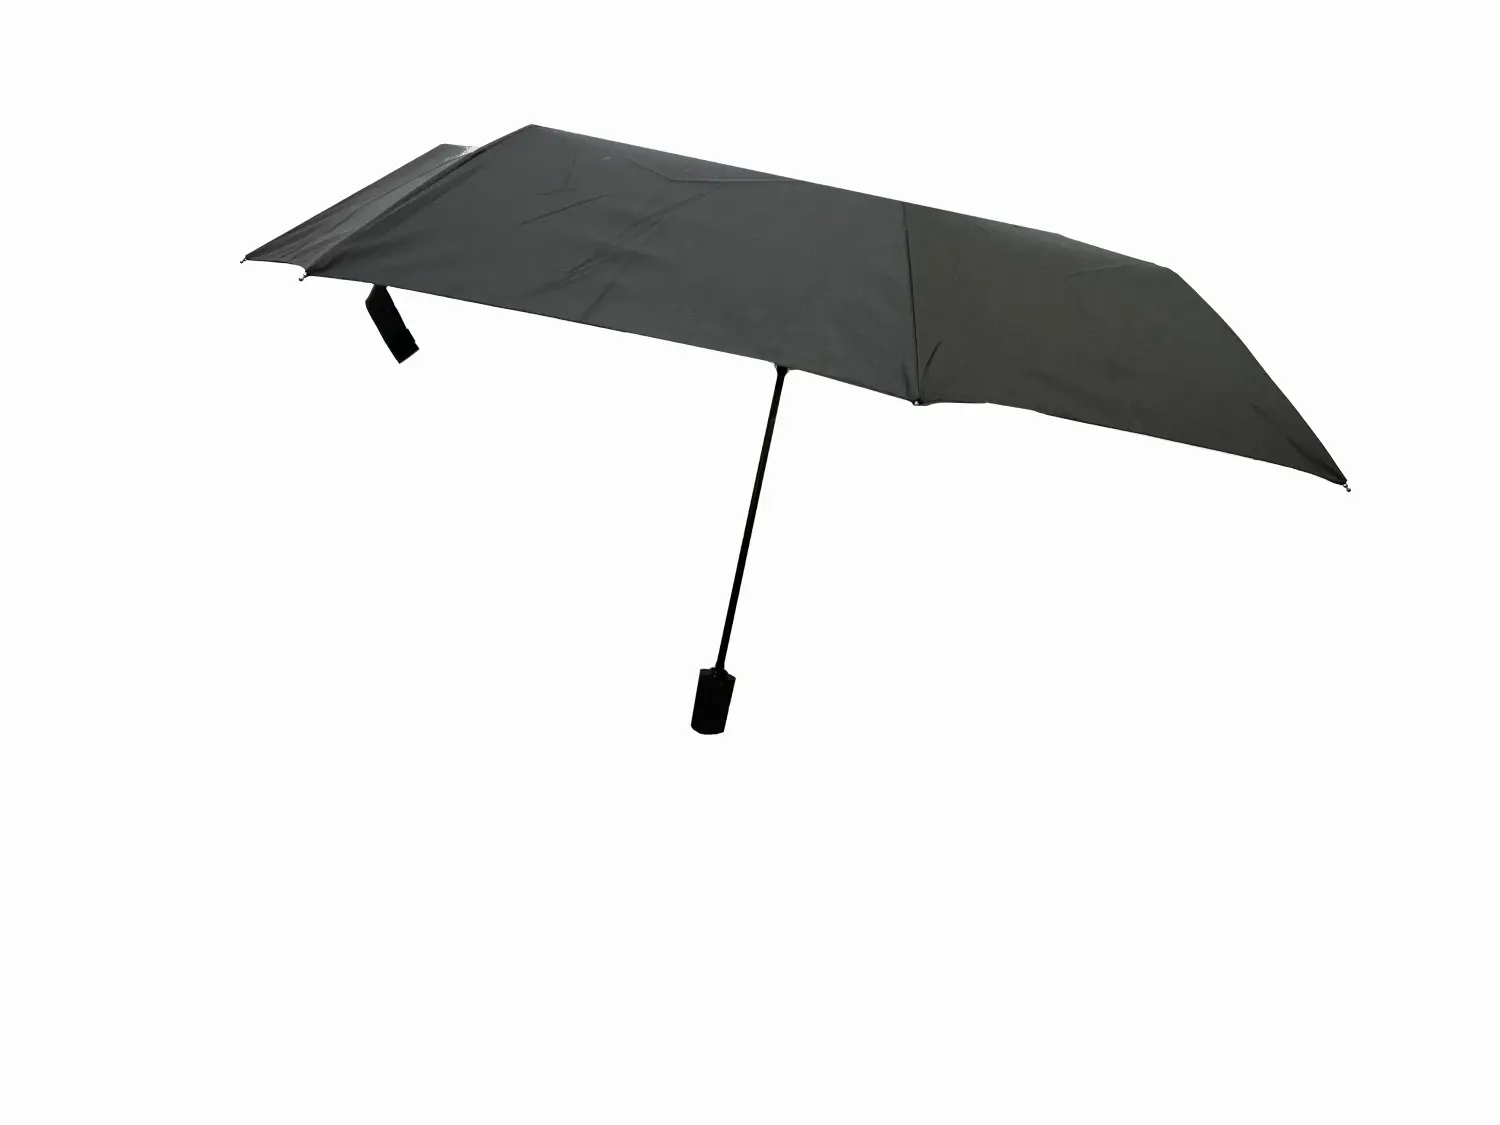 Skoda Automatik Regenschirm Stockschirm Umbrella Simply Clever